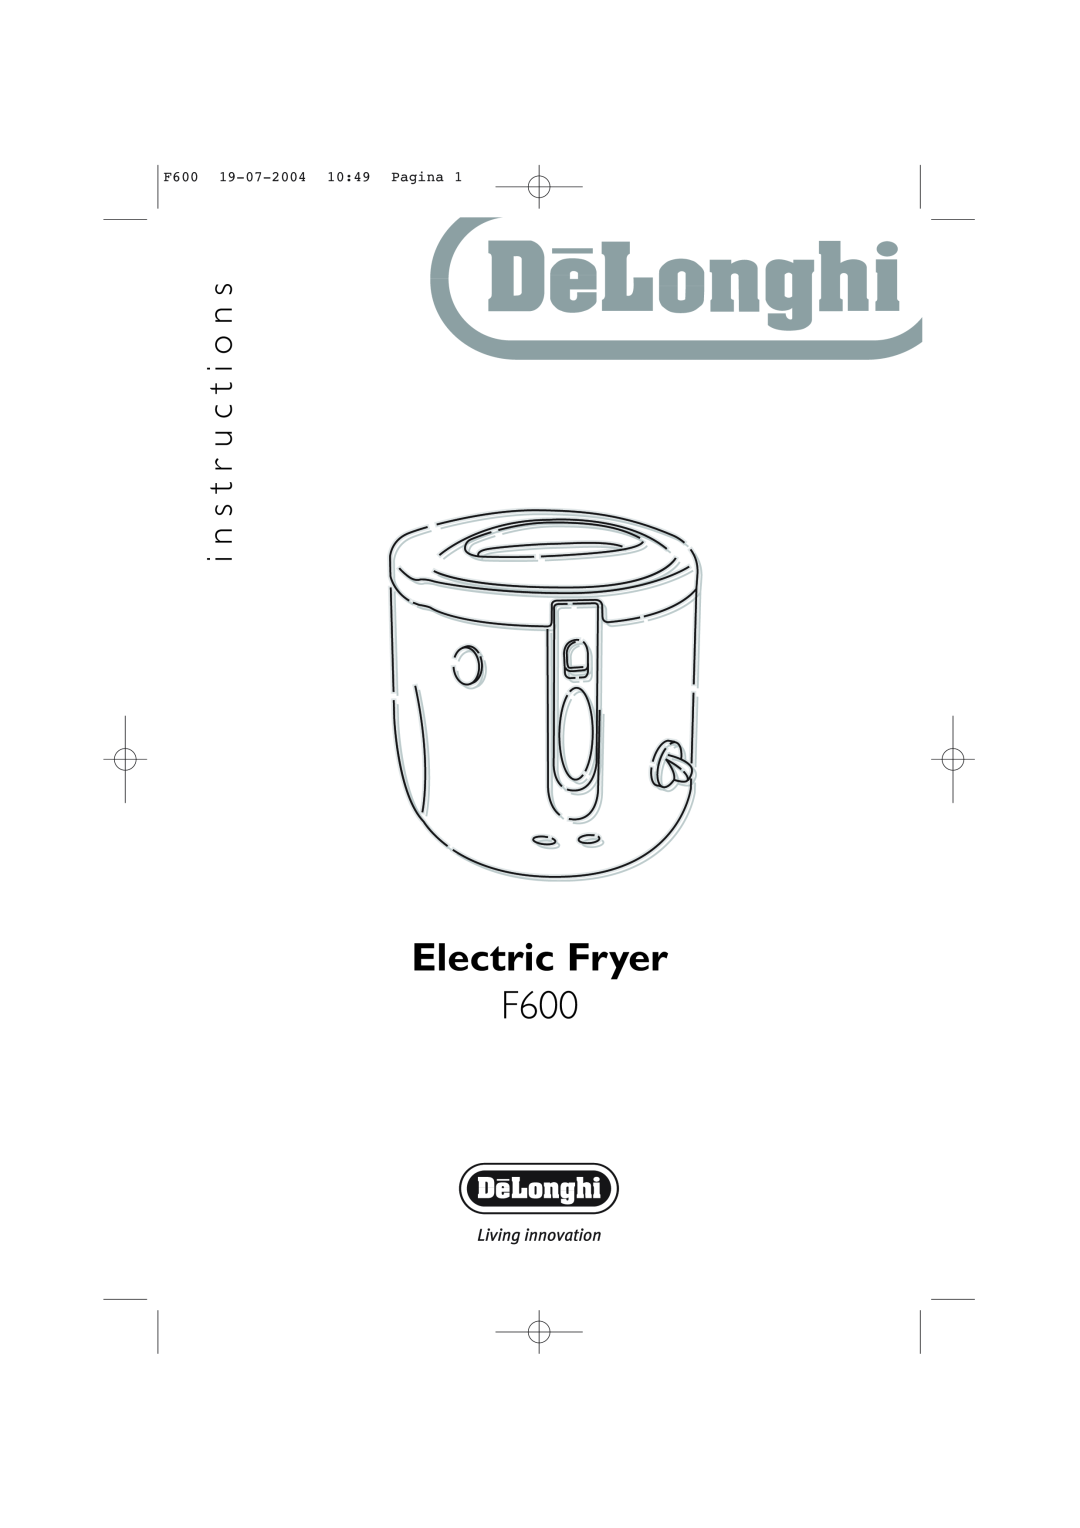 DeLonghi manual Electric Fryer, i n s t r u c t i o n s, F600 19-07-200410 49 Pagina 